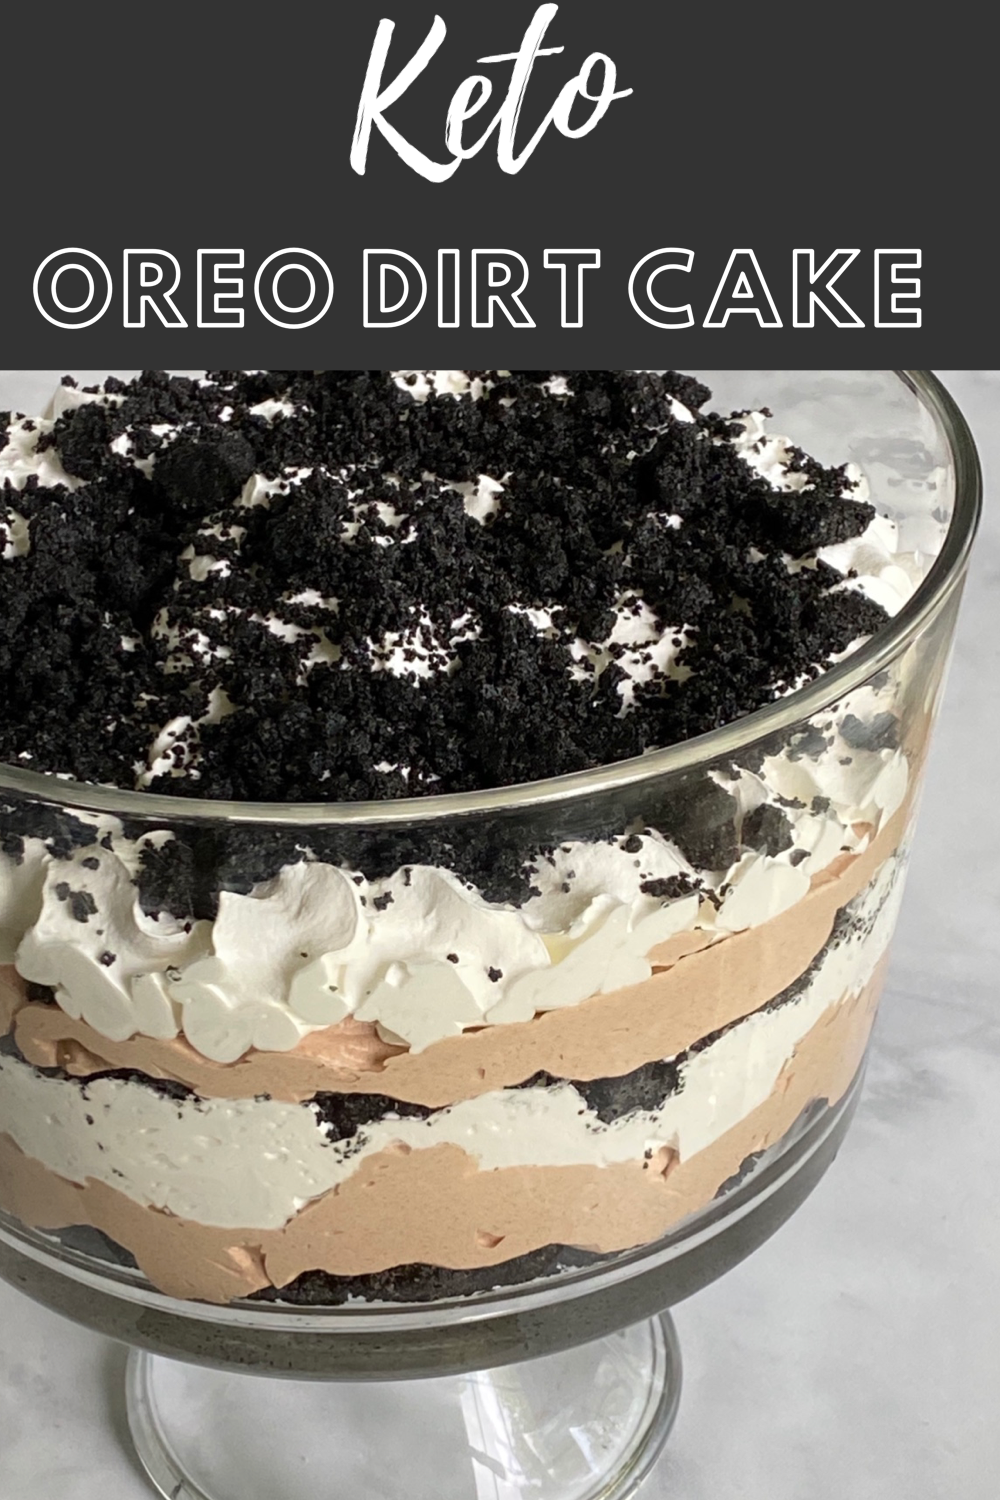 Keto Desserts: Oreo Dirt Cake And More